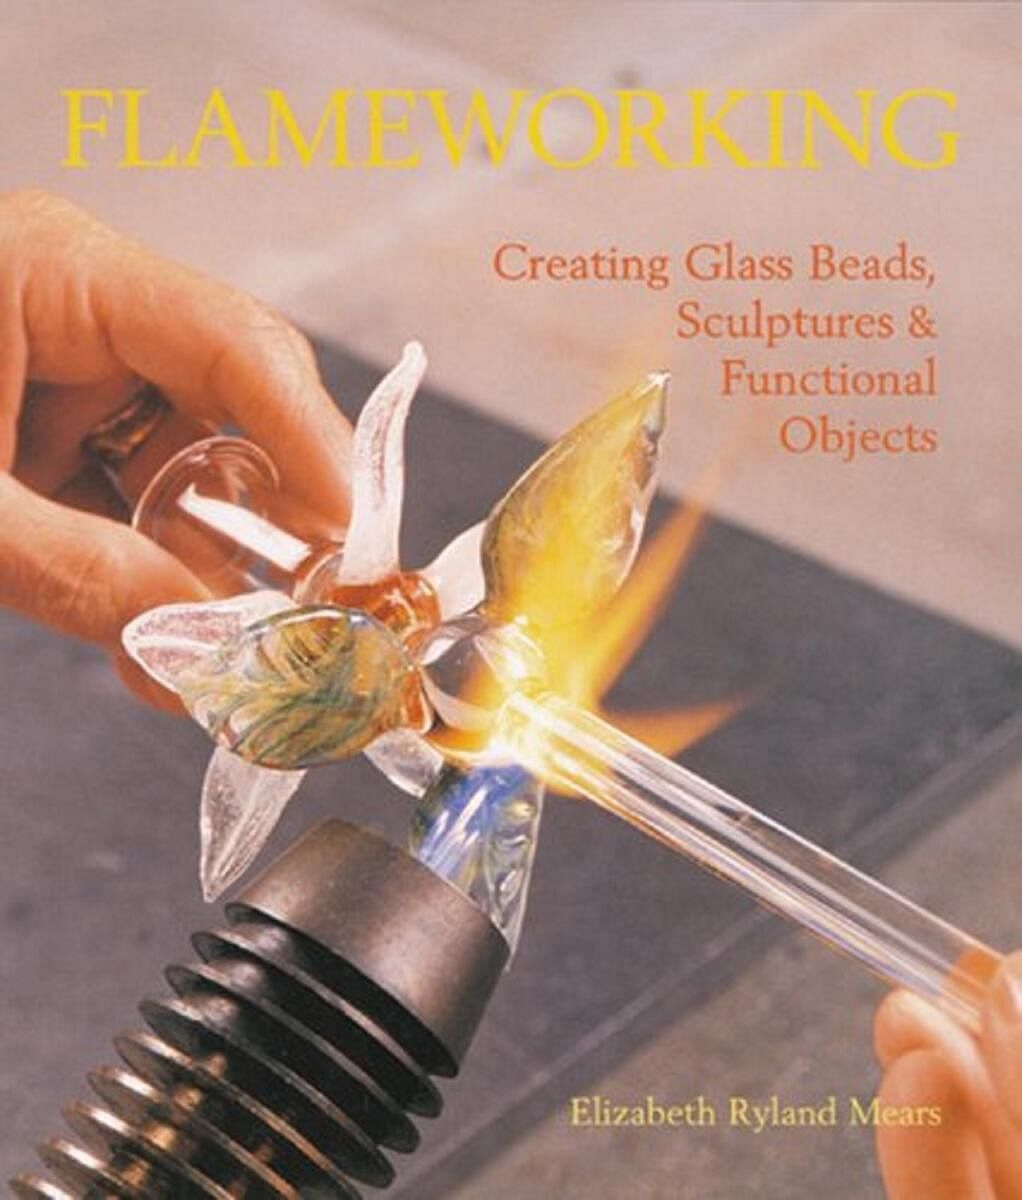 Four books on glassmaking